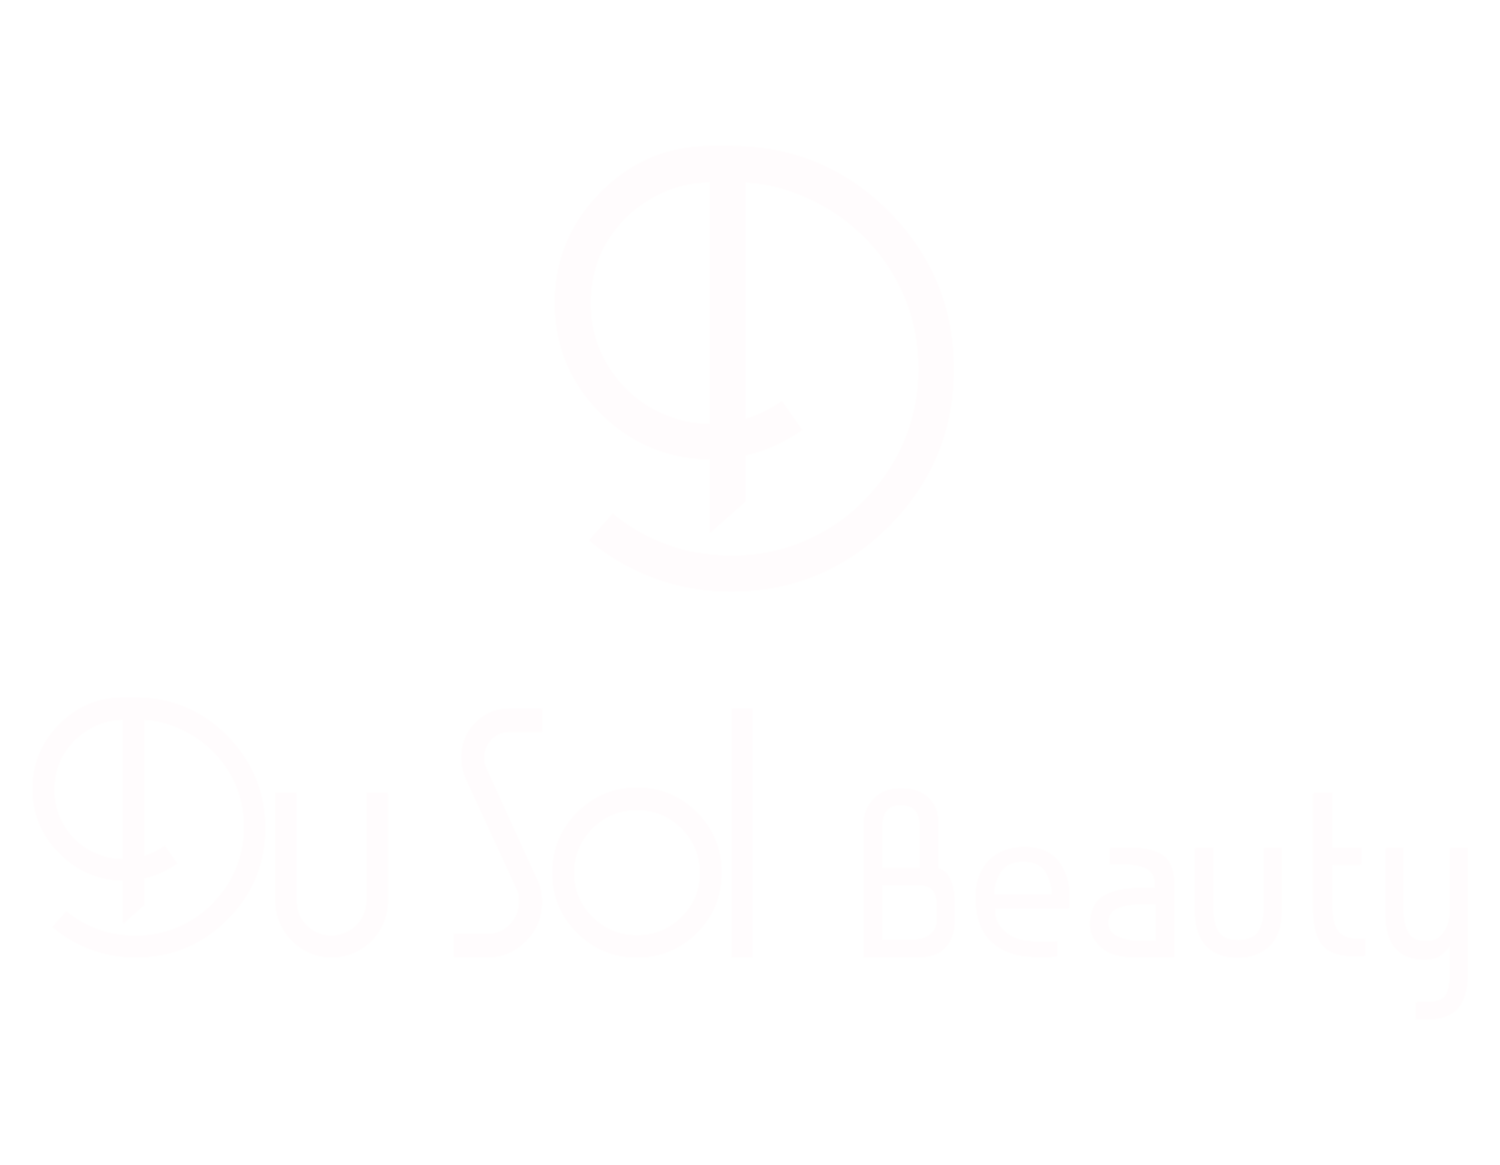 DuSol Beauty Singapore